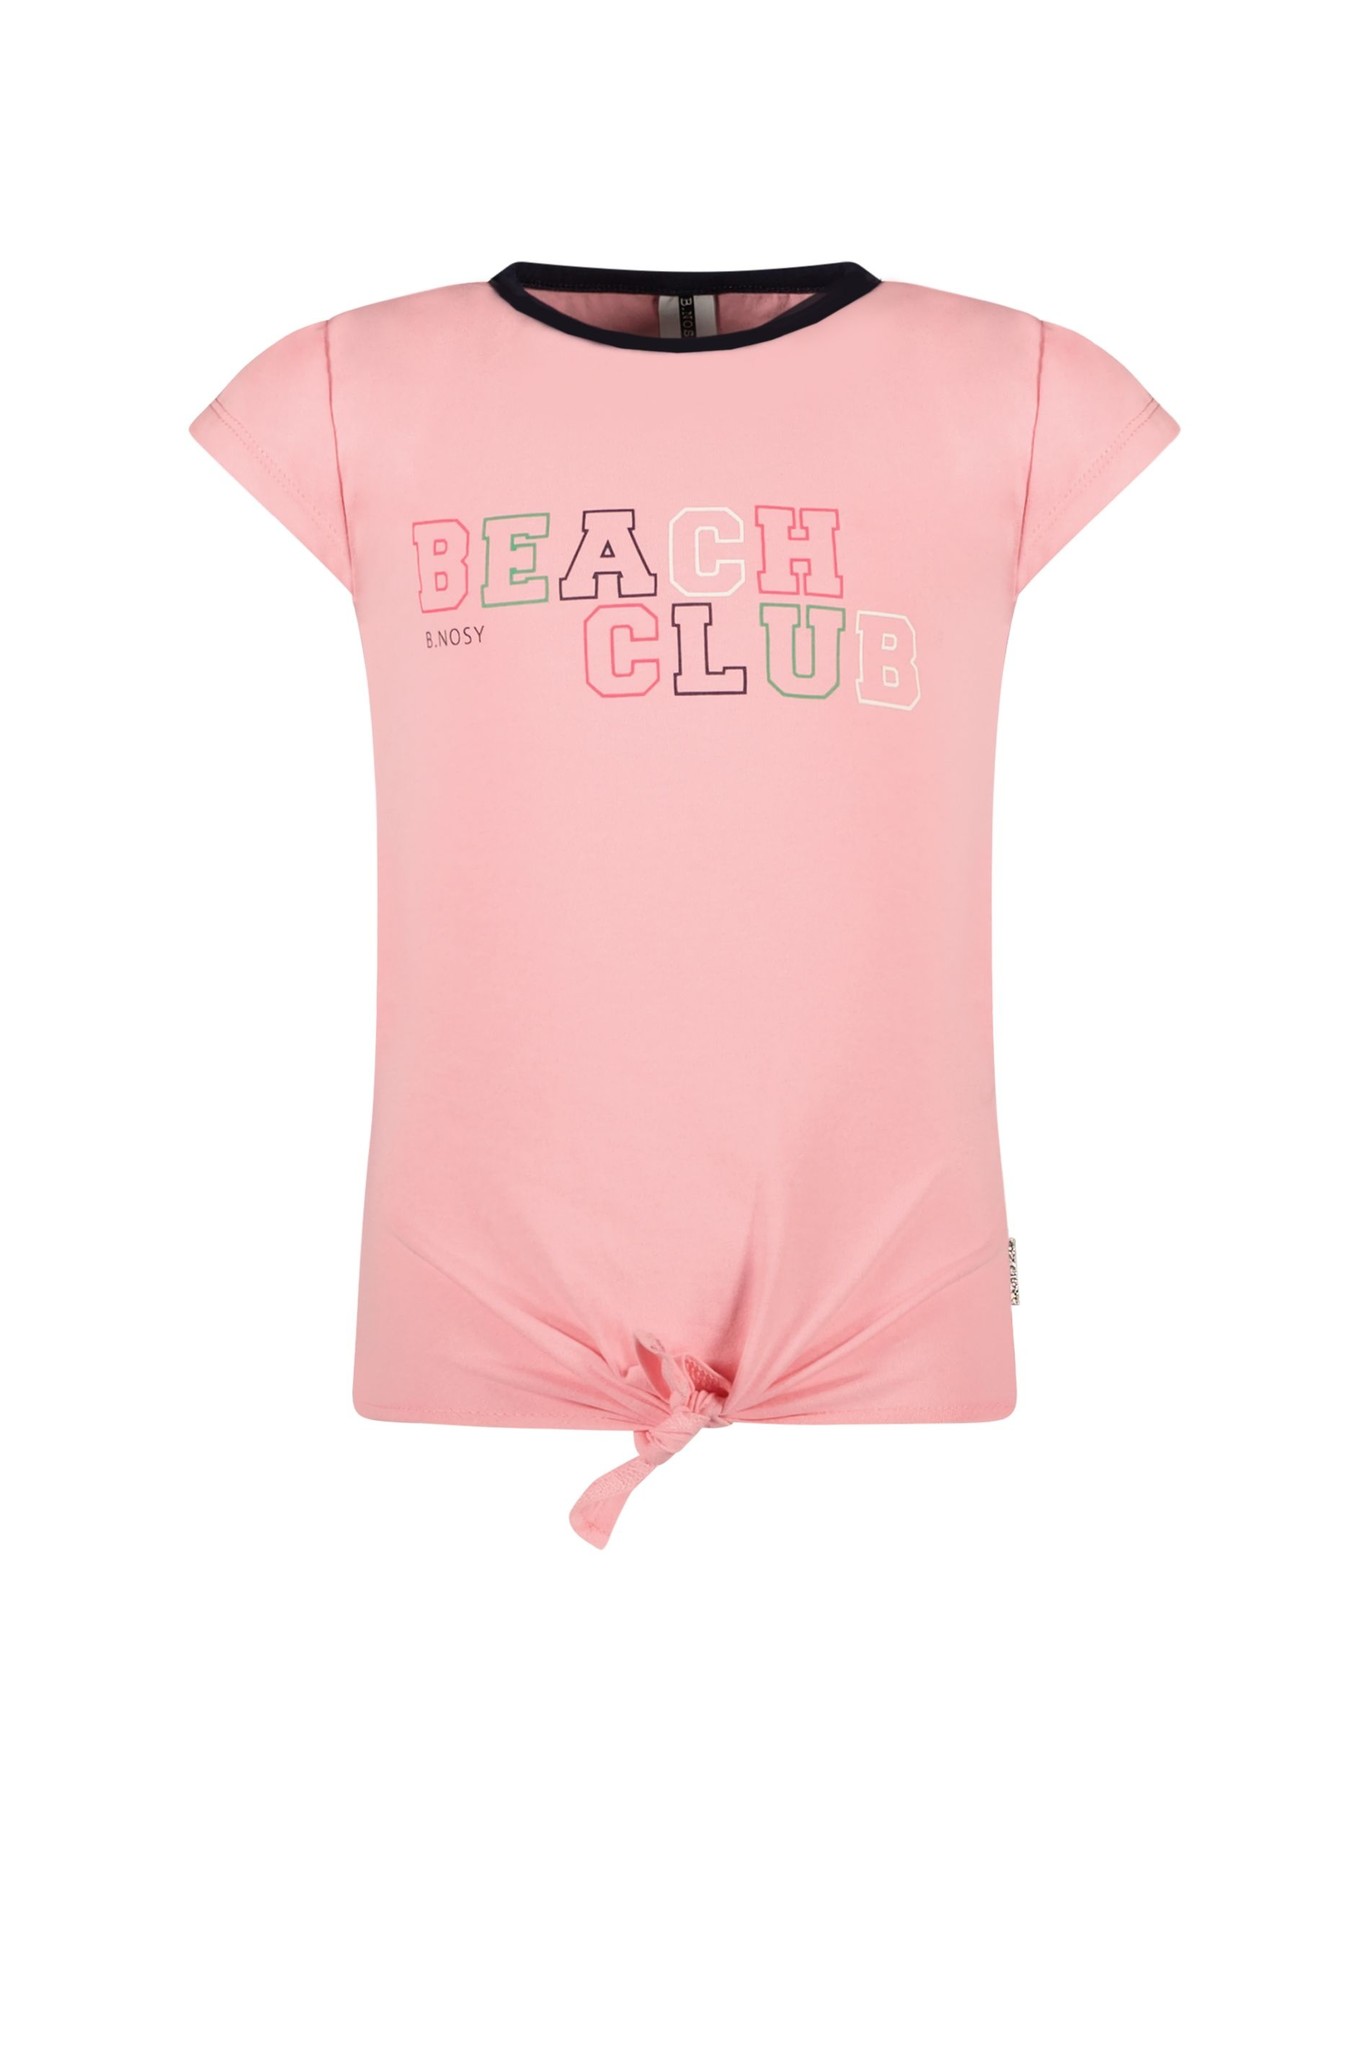 B.Nosy Meisjes t-shirt met knoop - Punch roze